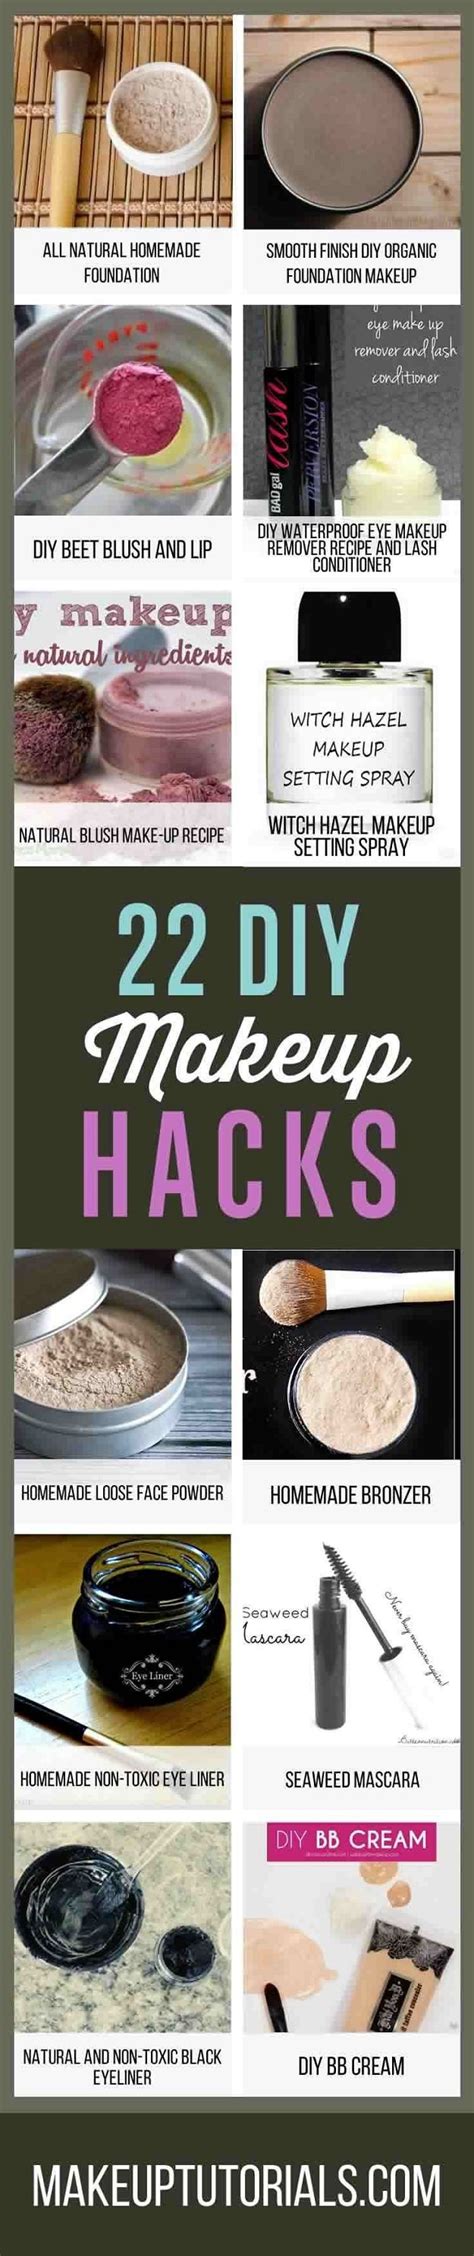 Easy Makeup Recipe Ideas For Diy Cosmetics Fashion Daily